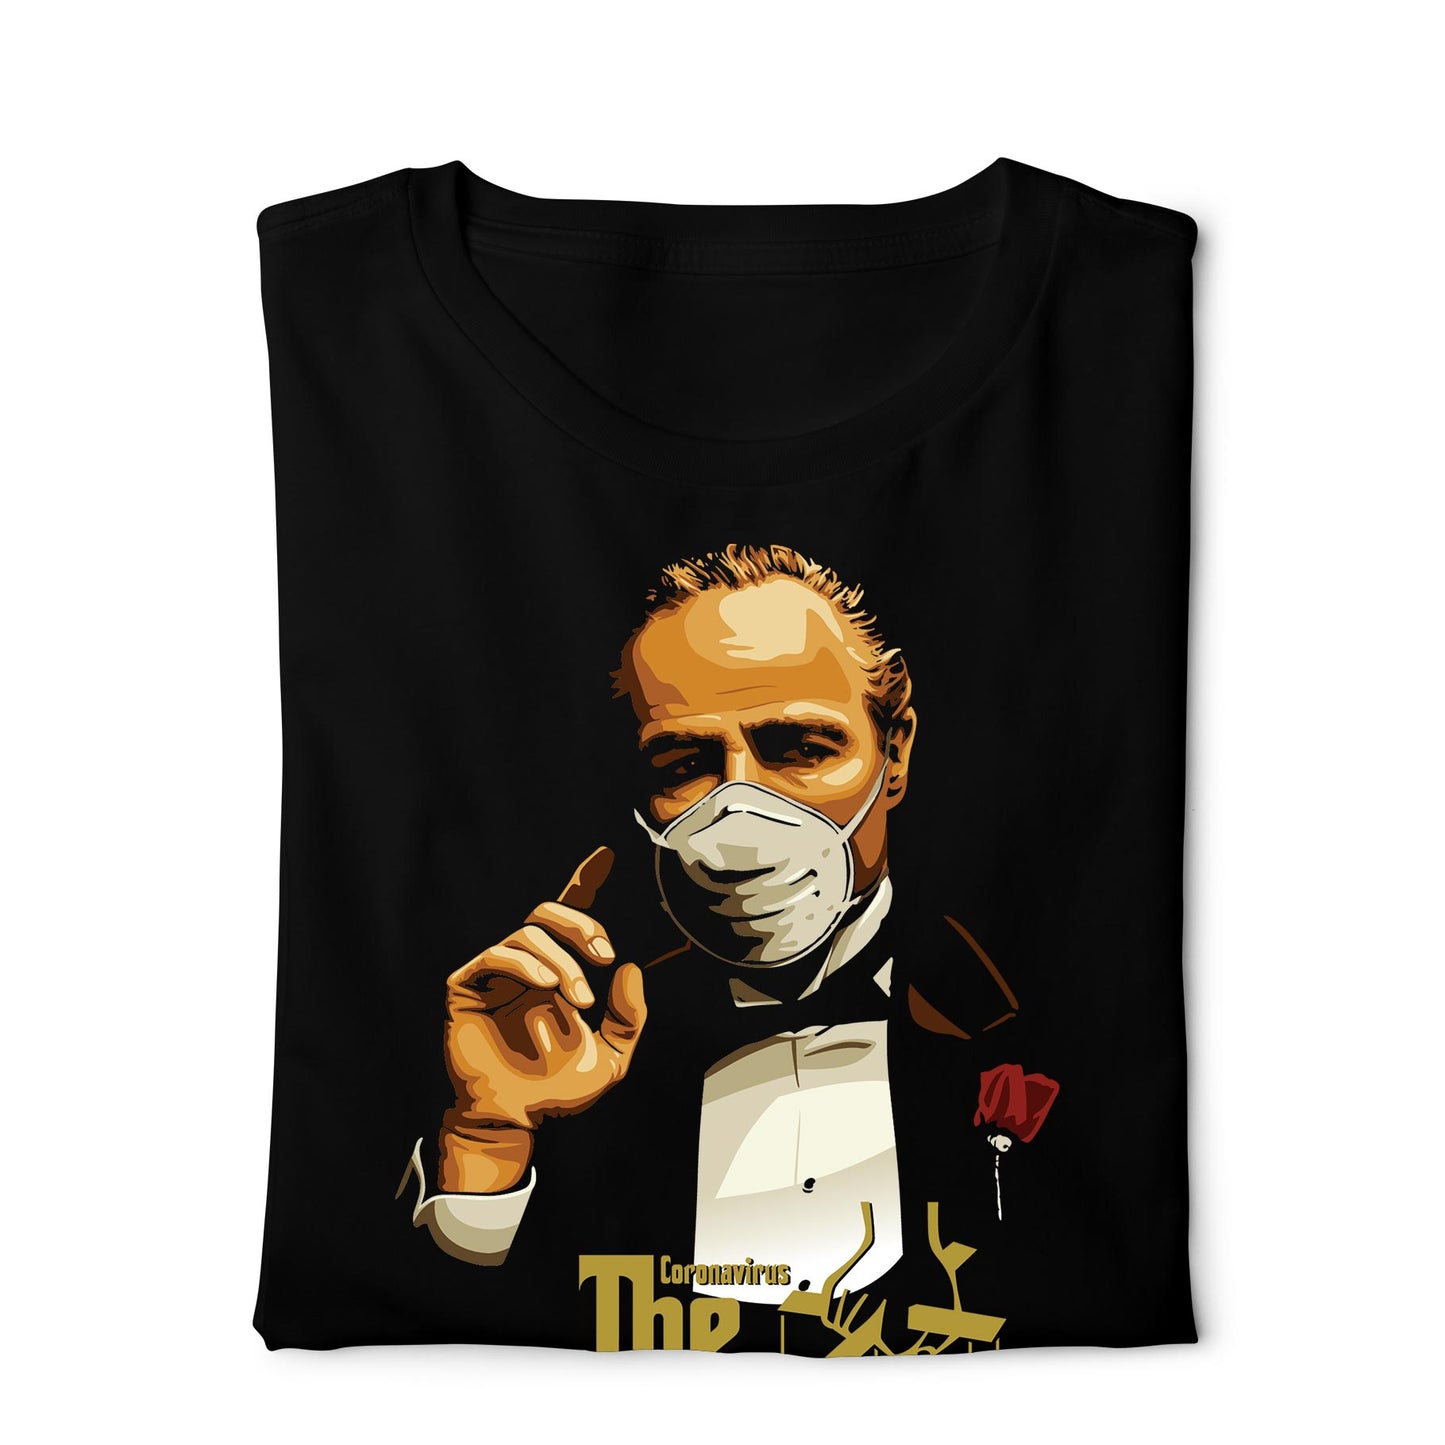 Godfather corona THE LOCKDOWN - Digital Graphics Basic T-shirt Black - Ravin 